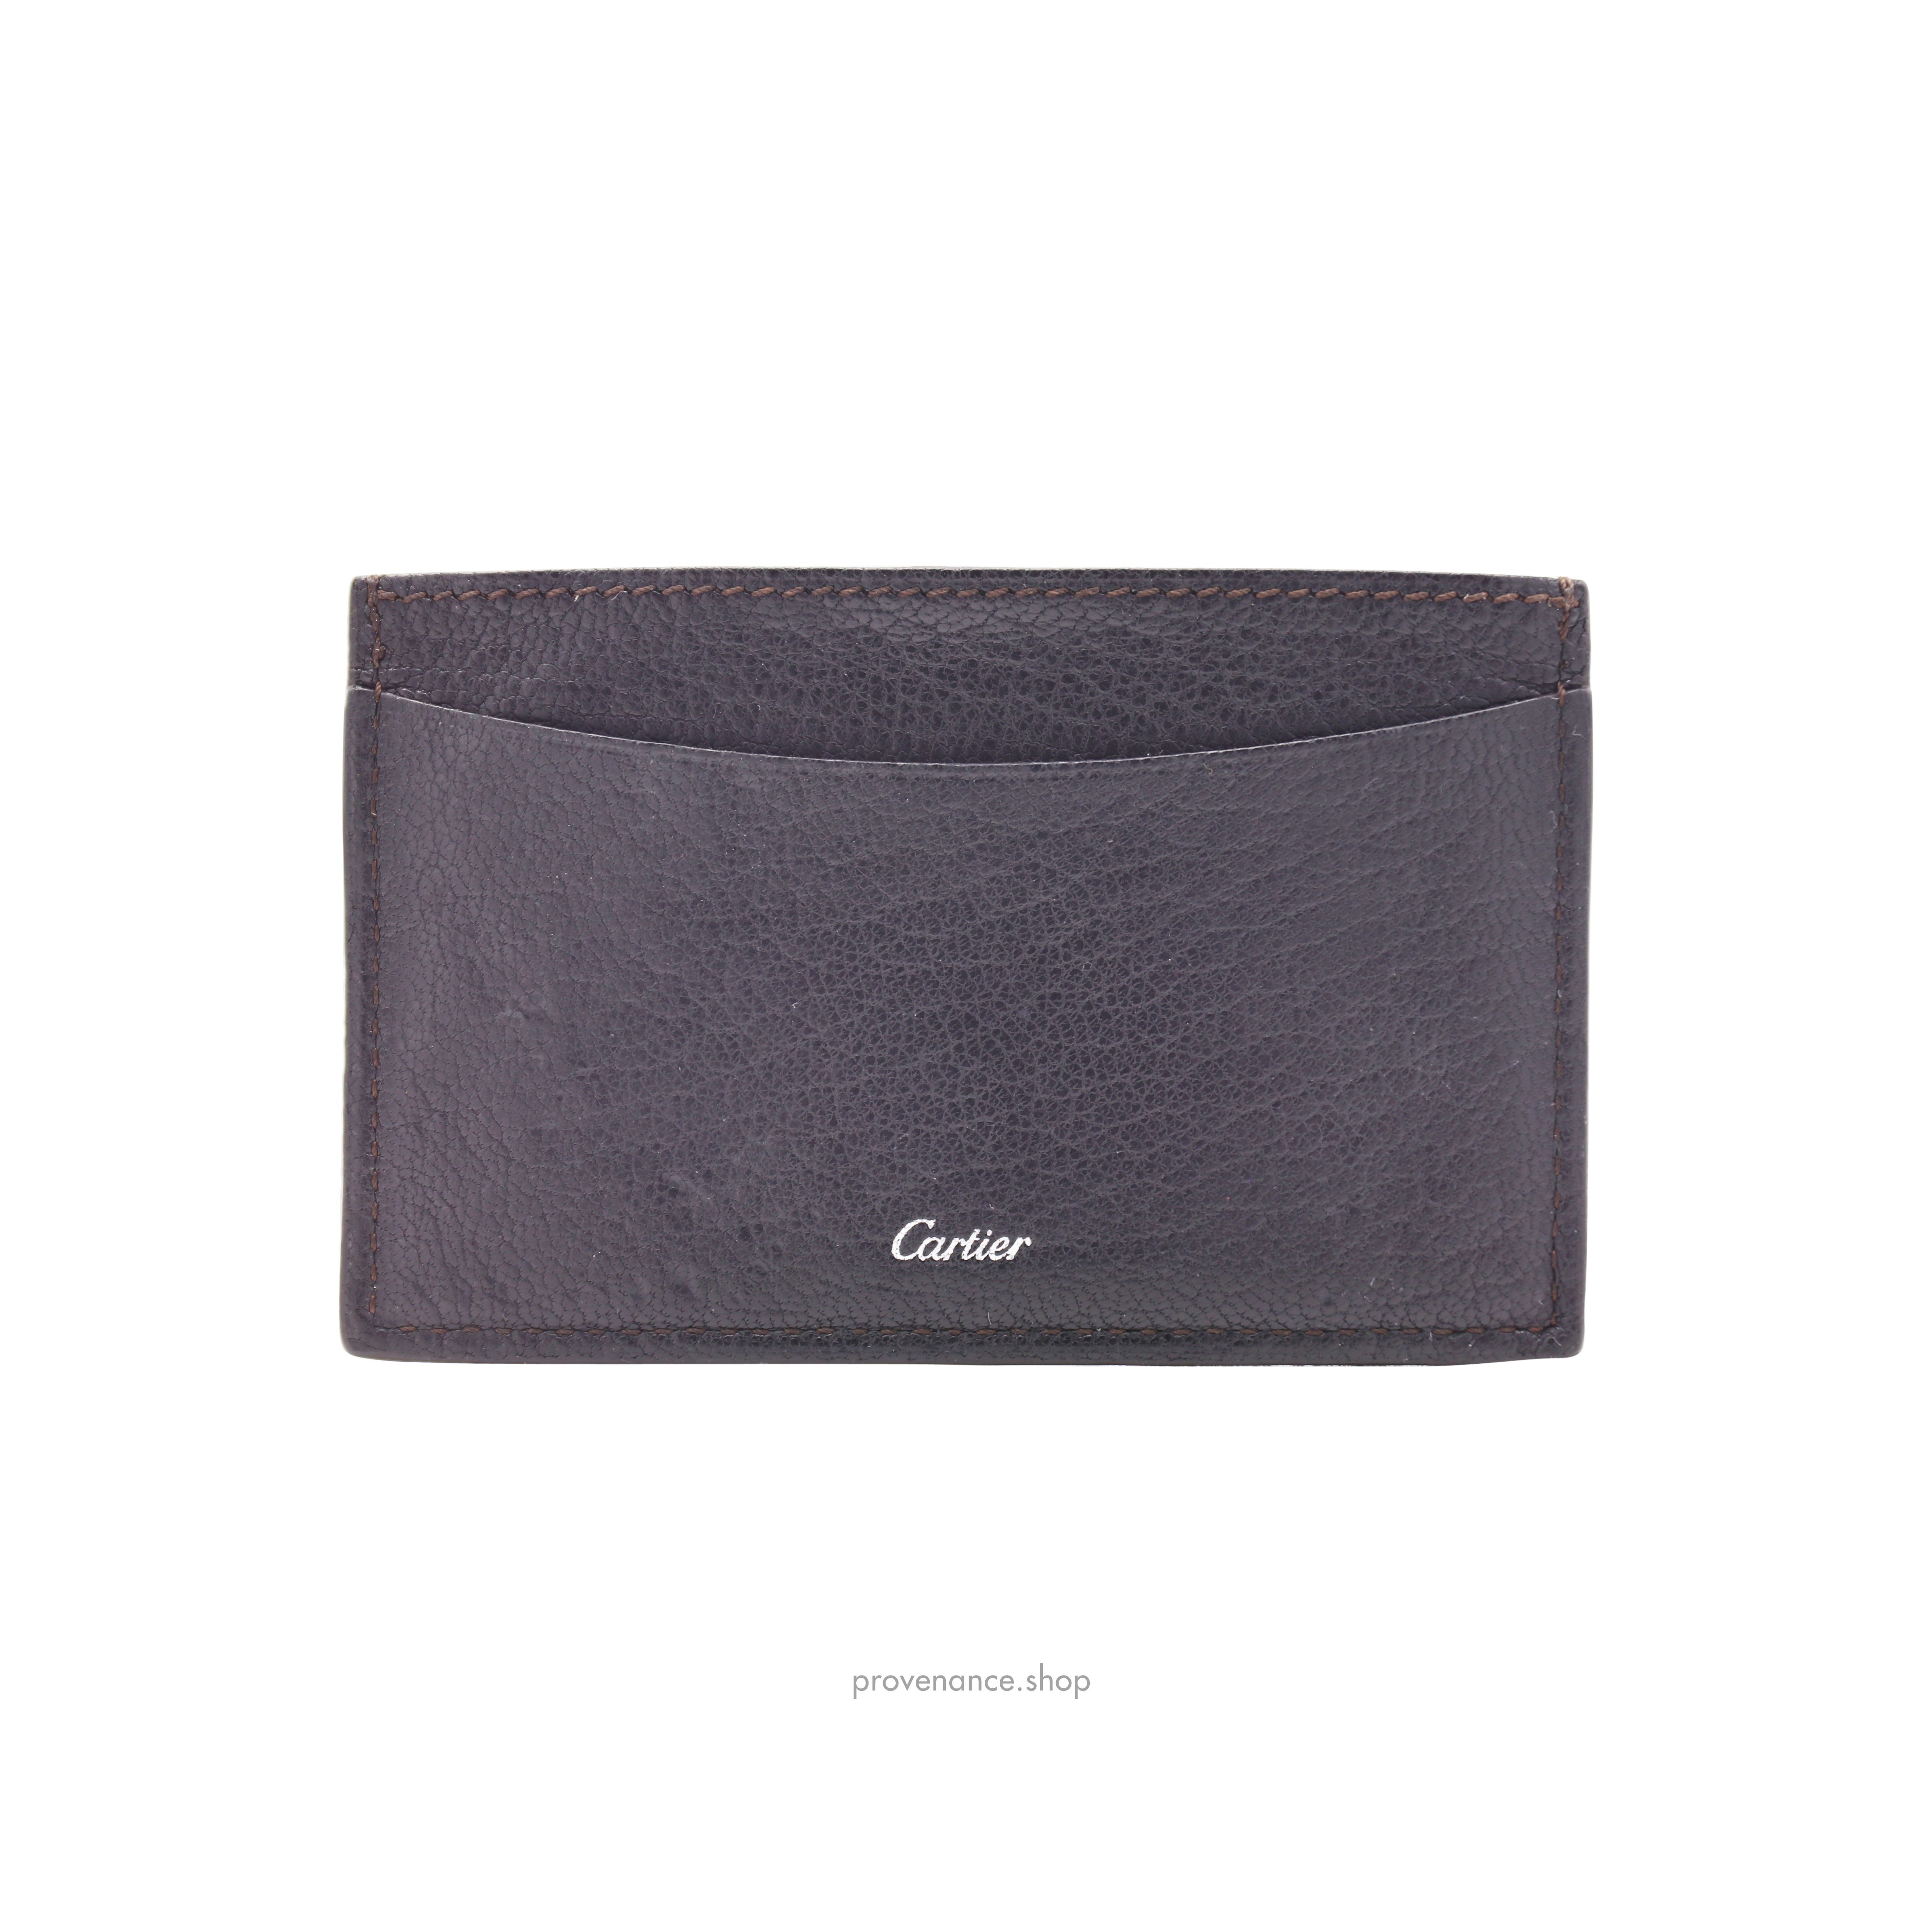 Cartier Card Holder Wallet - Black Chevre Leather - 1